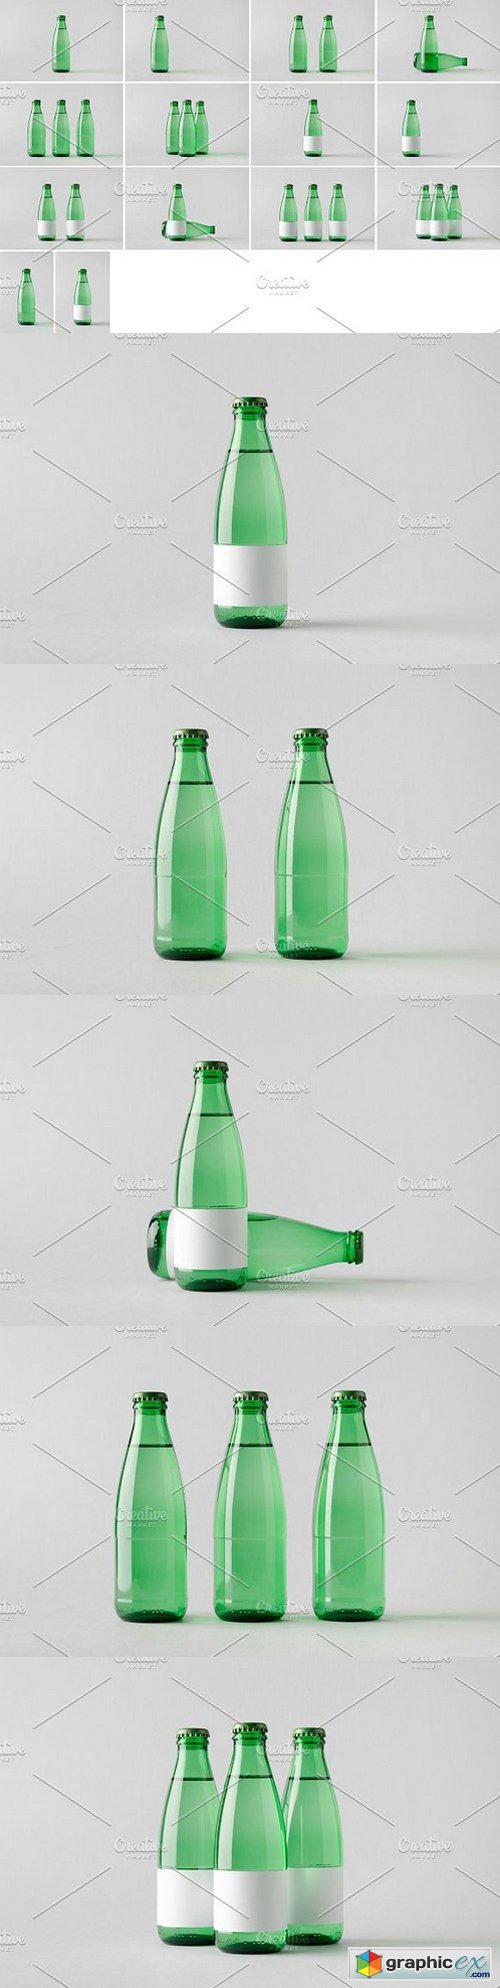 Water Bottle Mock-Up Photo Bundle 4